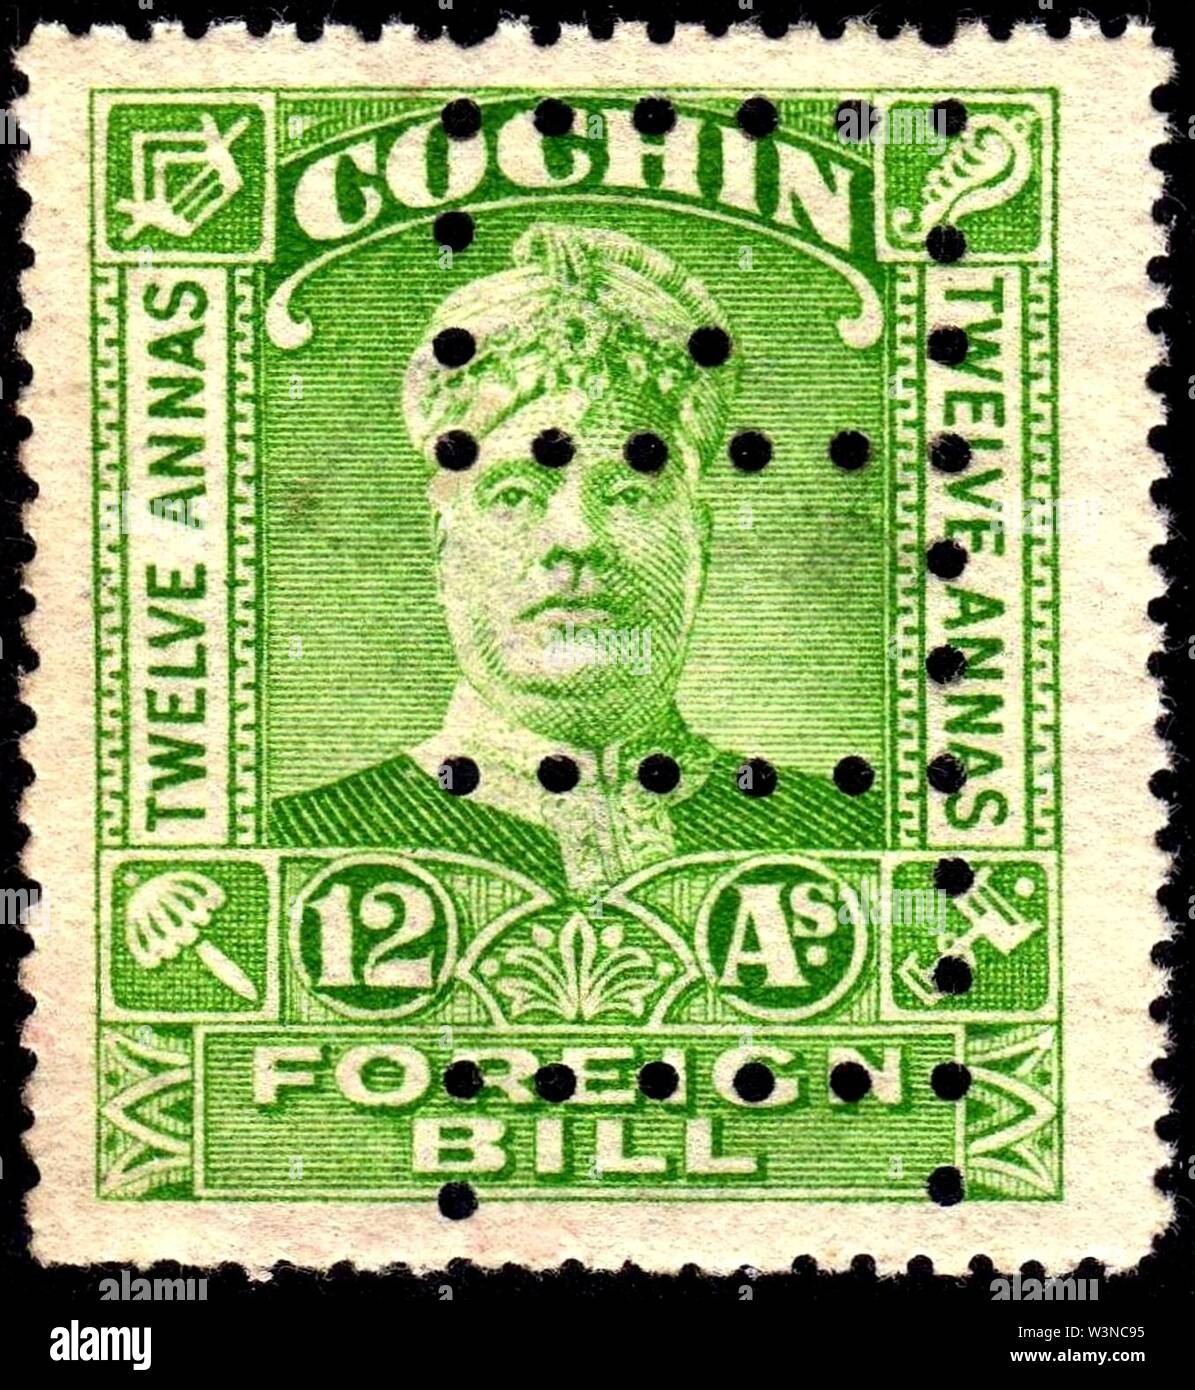 Cochin foreign bill revenue stamp. Stock Photo